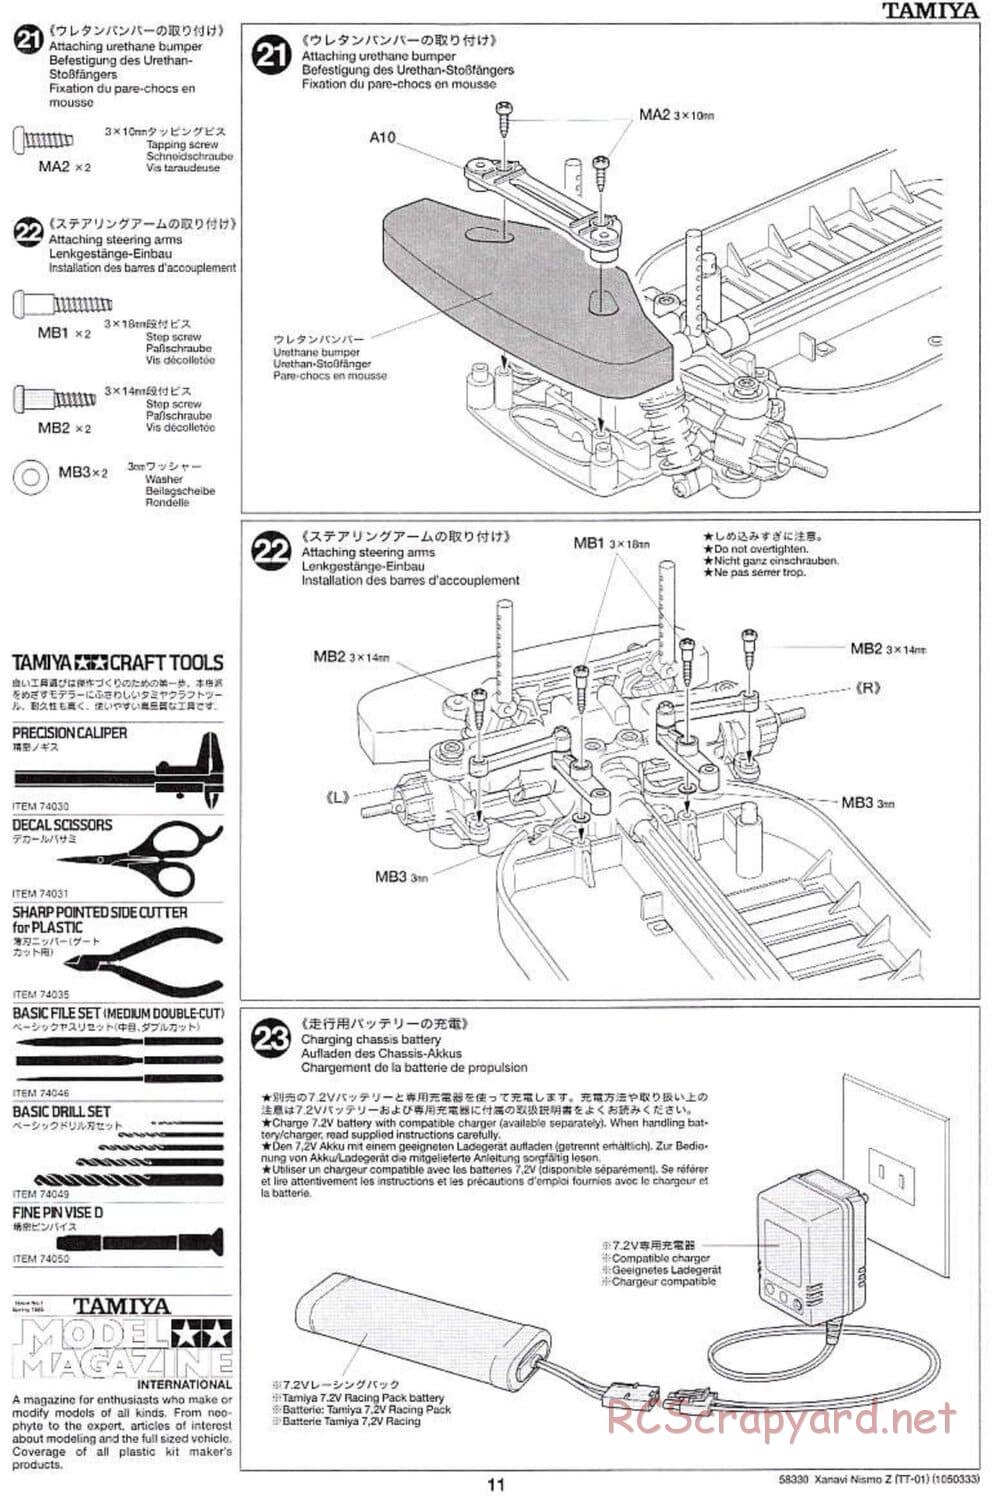 Tamiya - Xanavi Nismo Z - TT-01 Chassis - Manual - Page 11